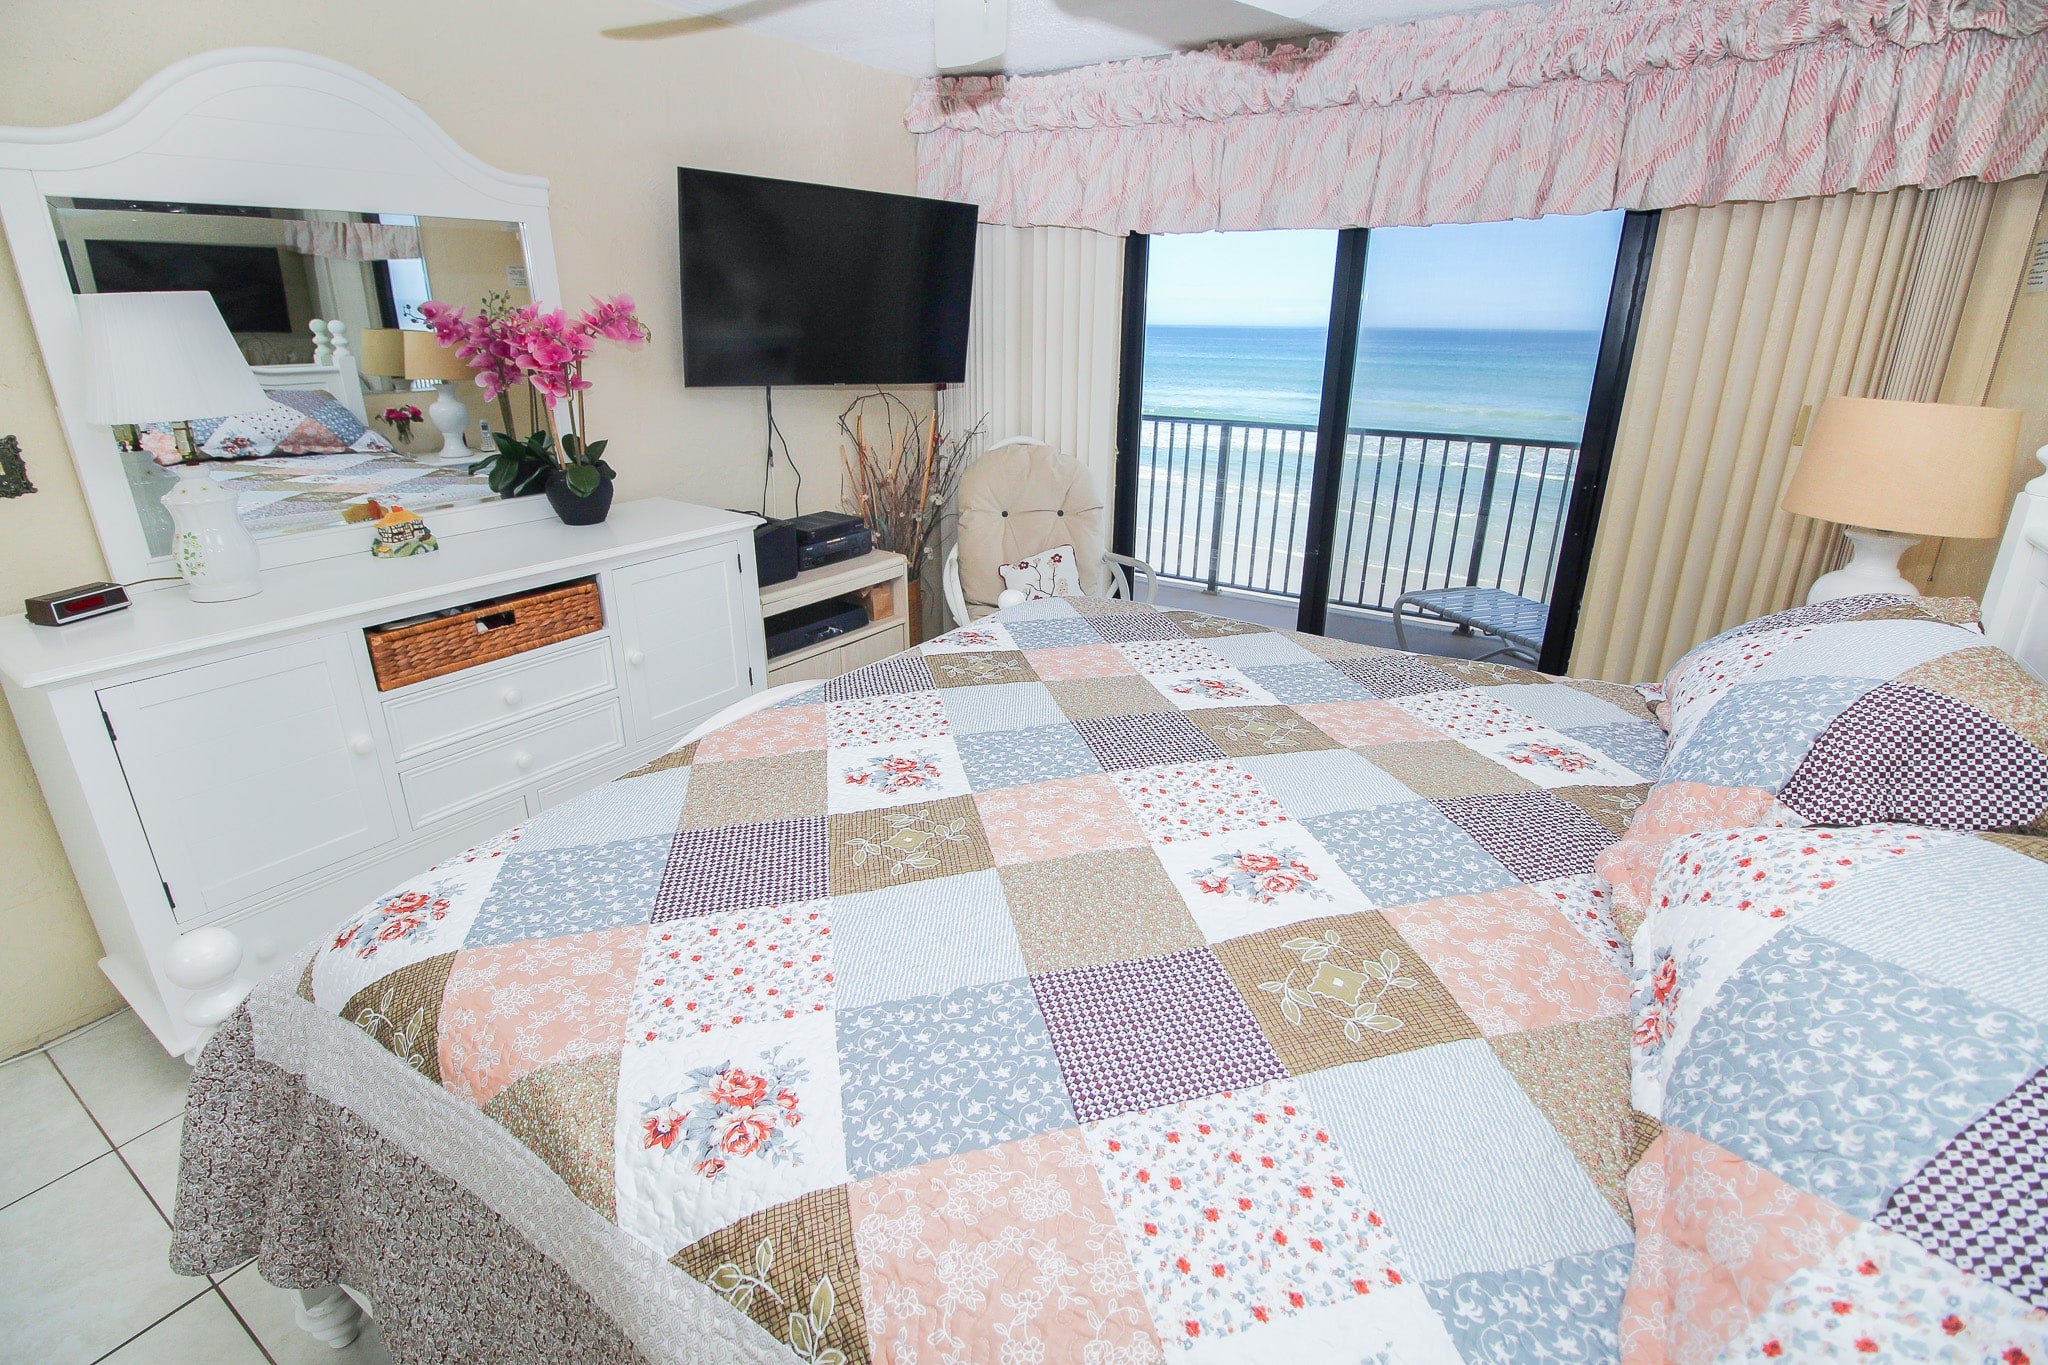 Tv & ocean view in primary bed